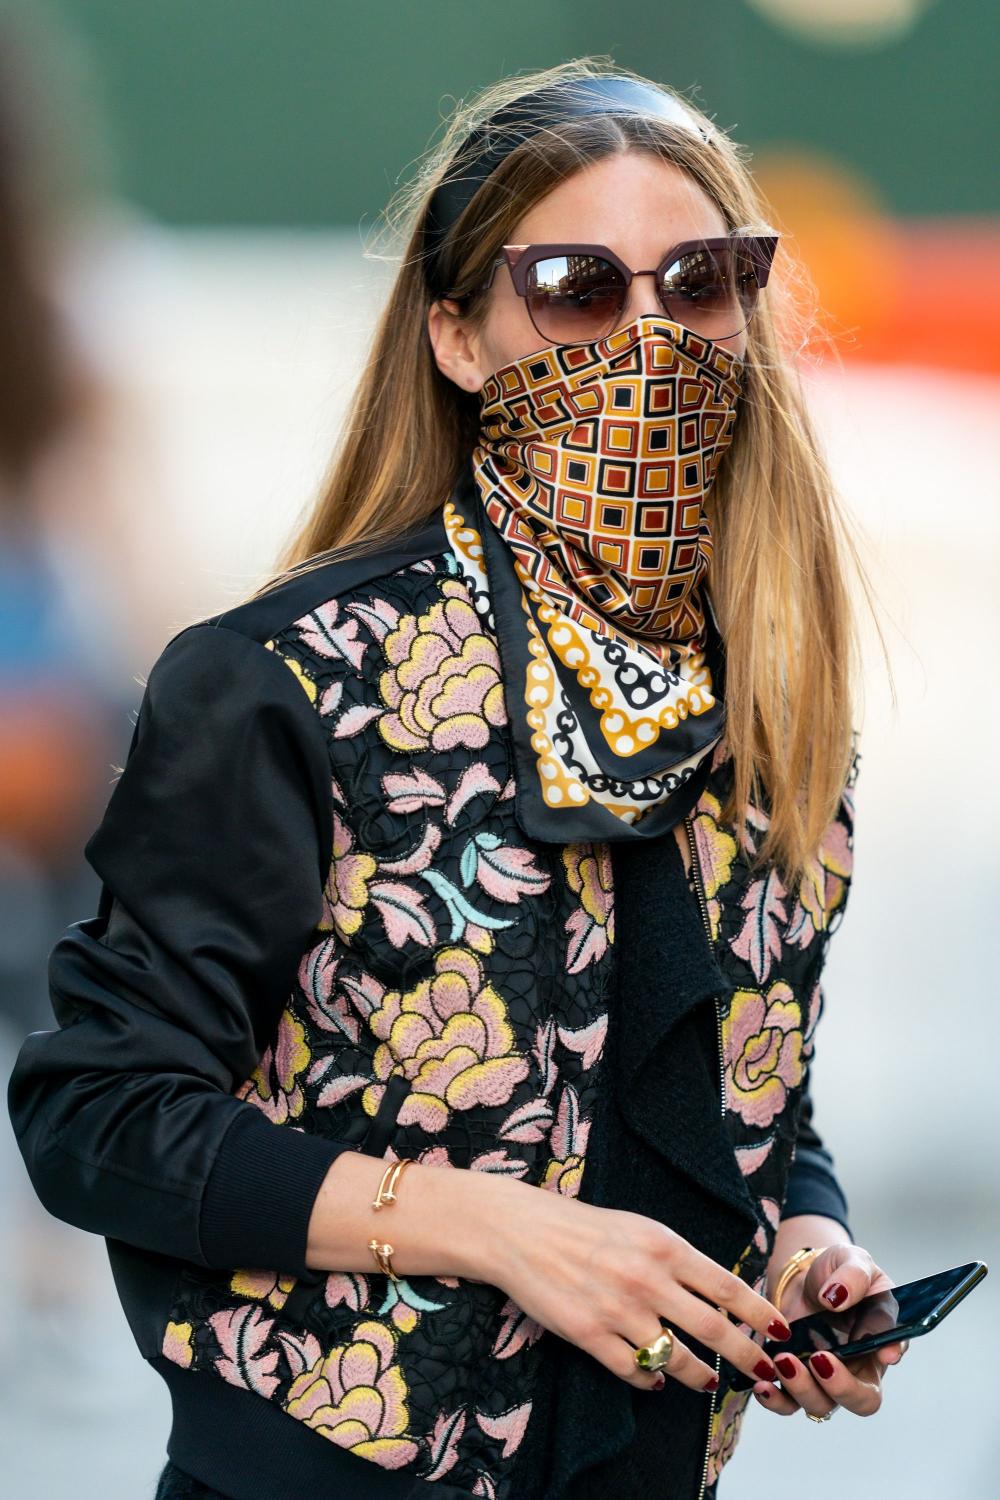 Face mask as a fashion accessory